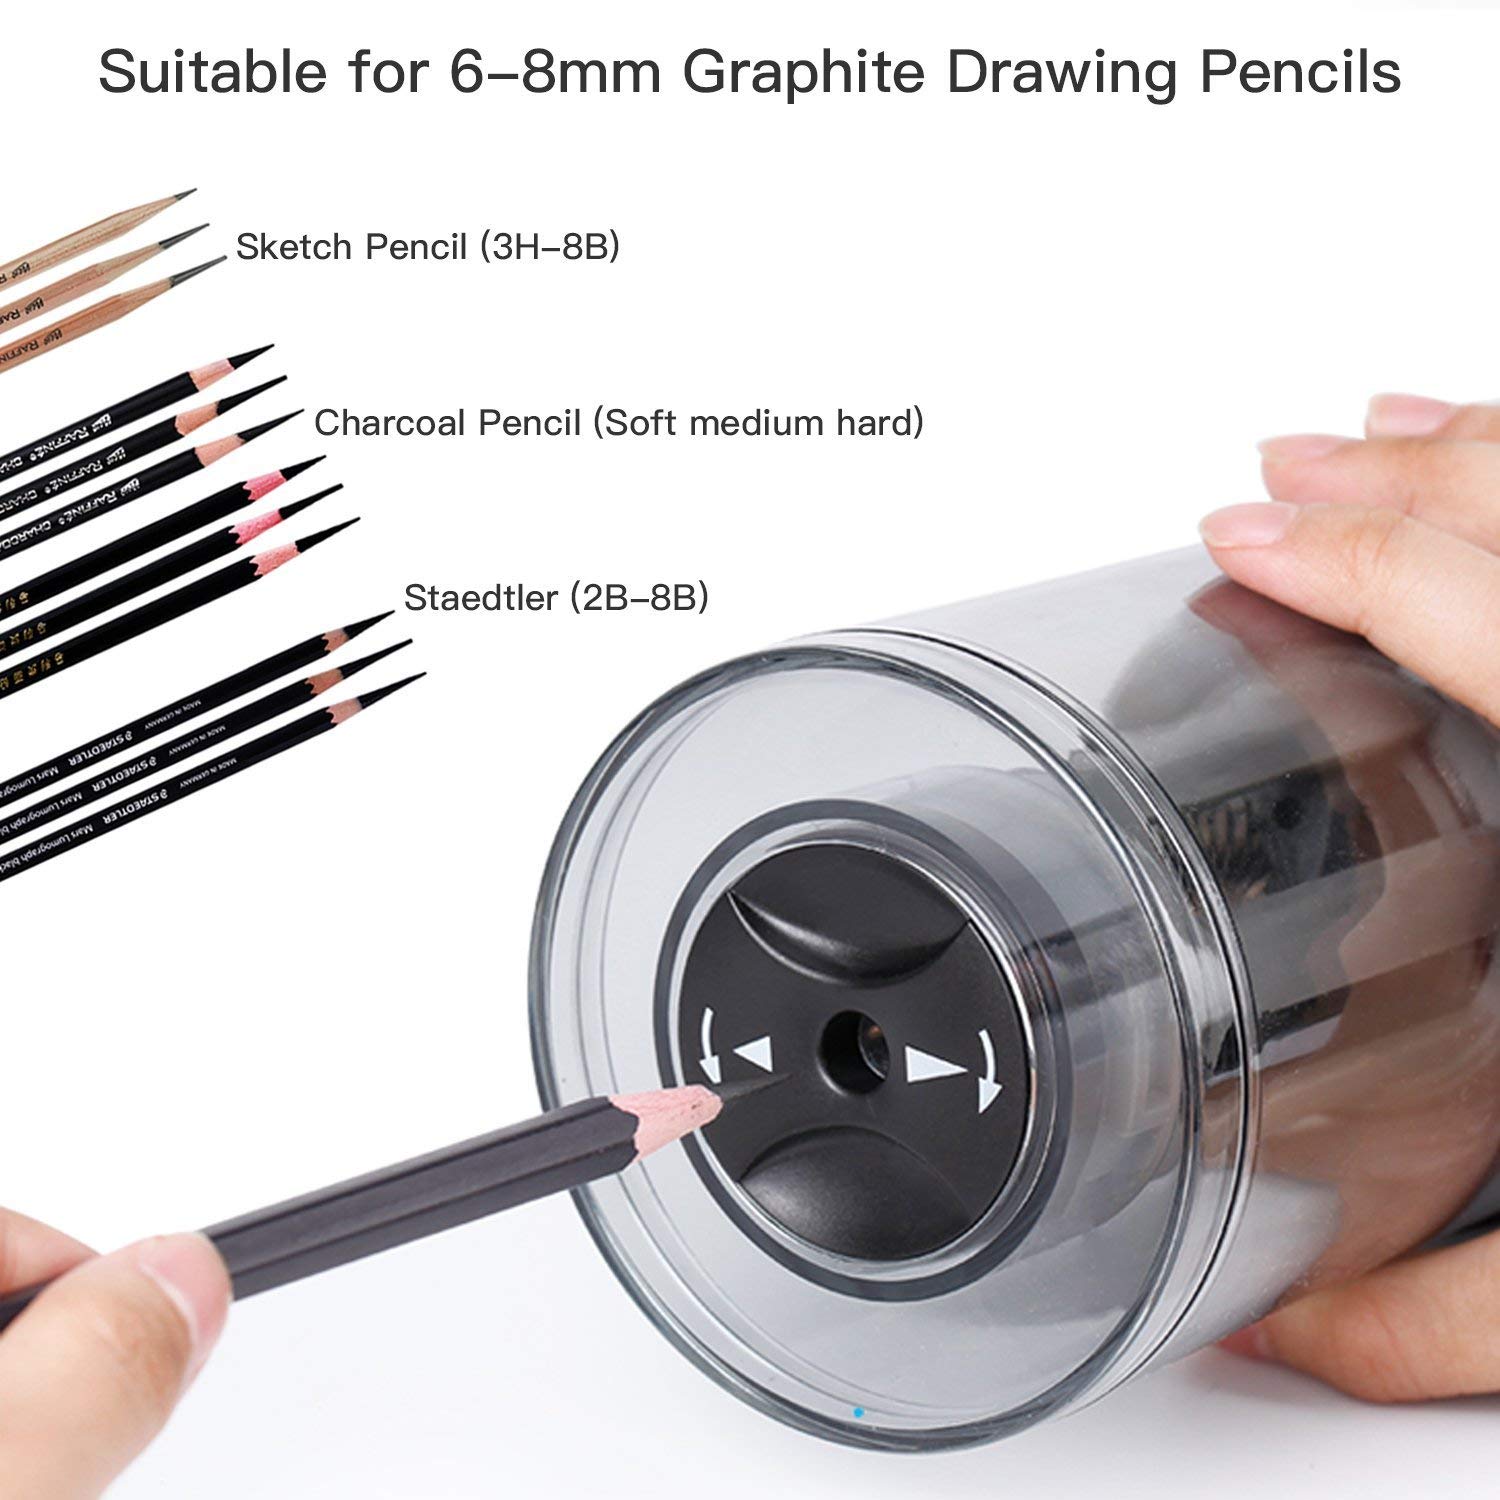 Long Point Electric Pencil Sharpener-PSB06 – AFMAT